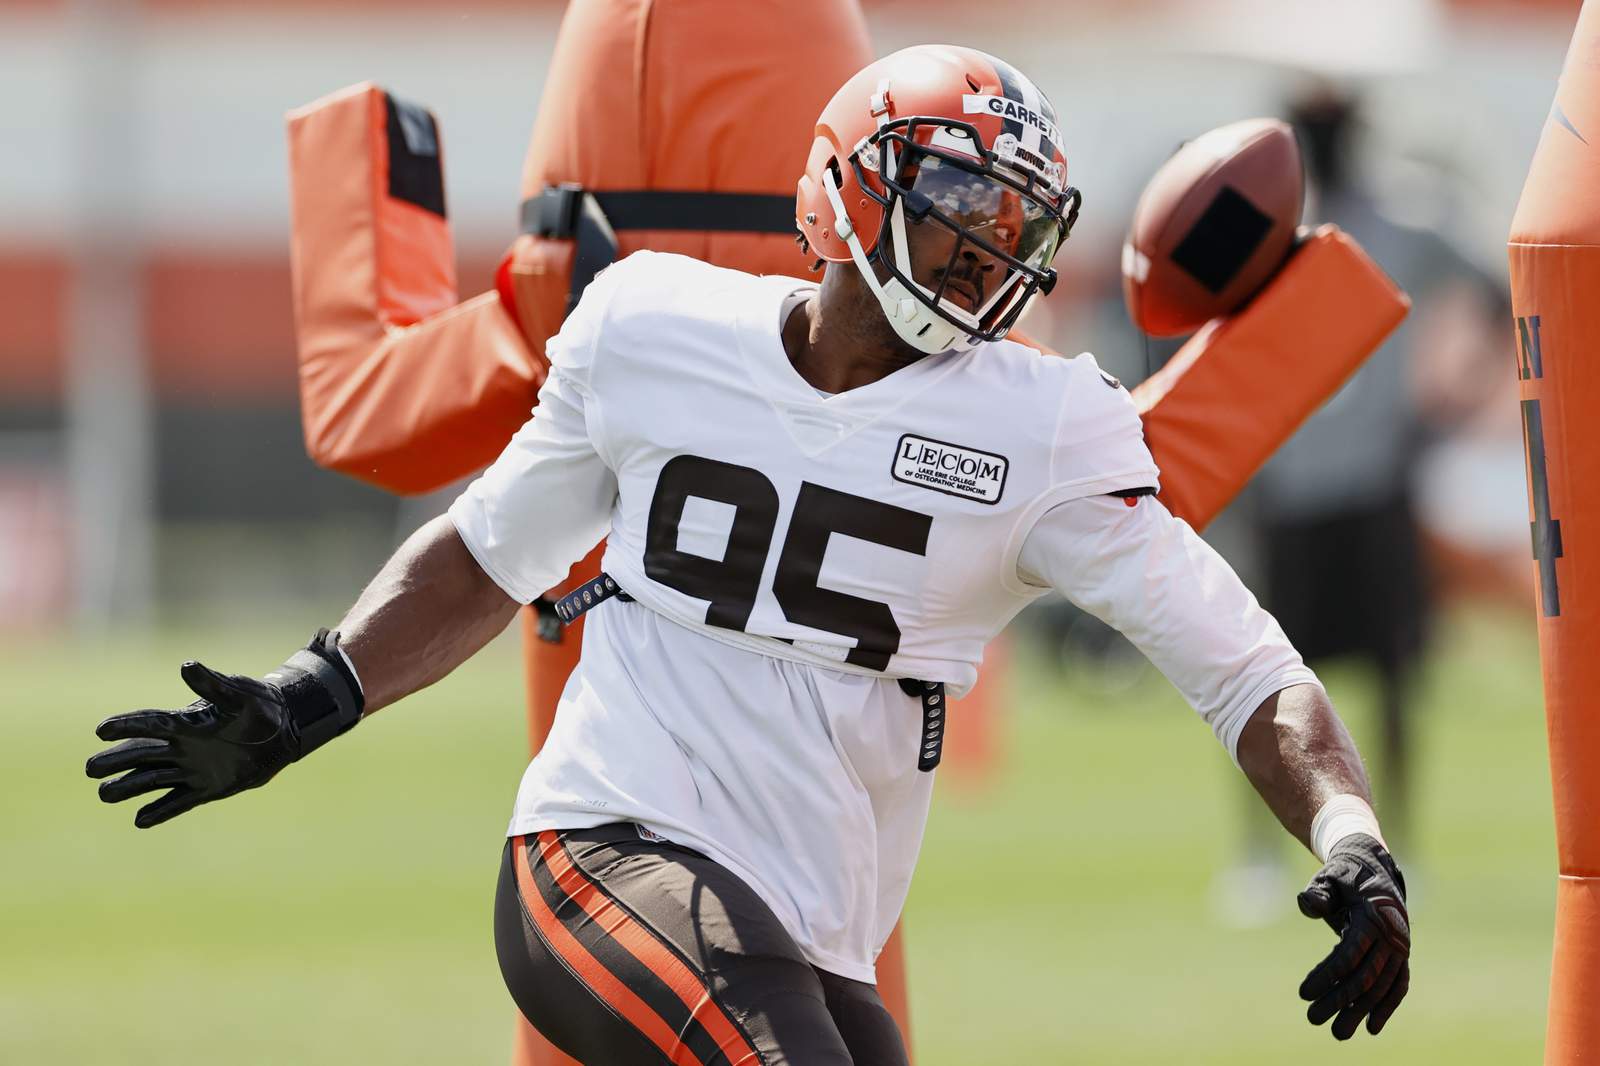 On edge: Browns' Garrett returns after NFL suspension